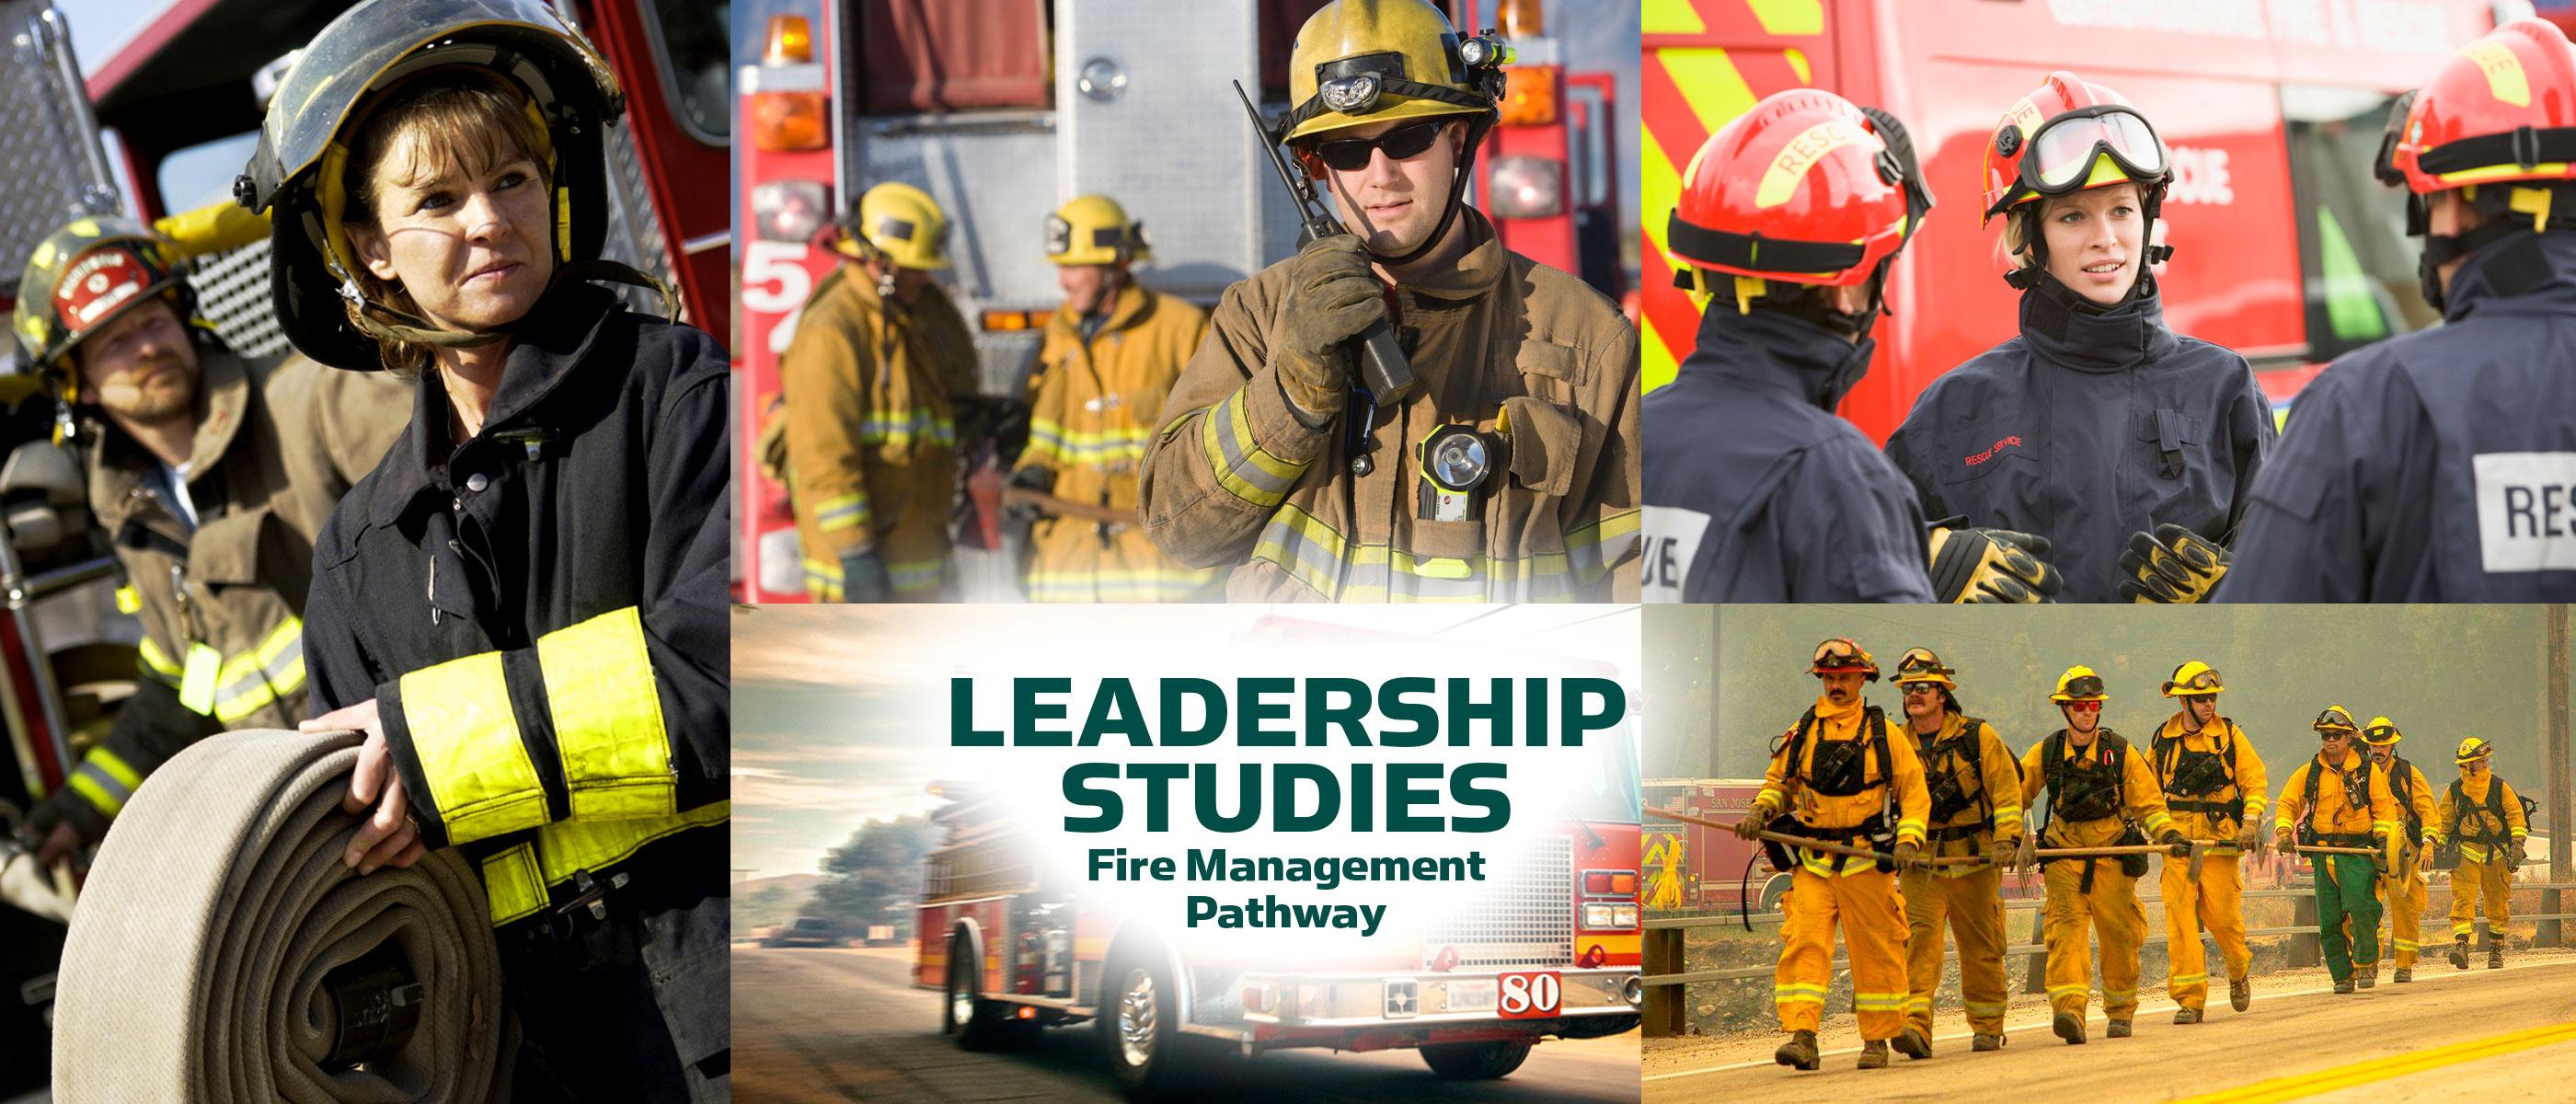 Leadership Studies Fire Management Pathway